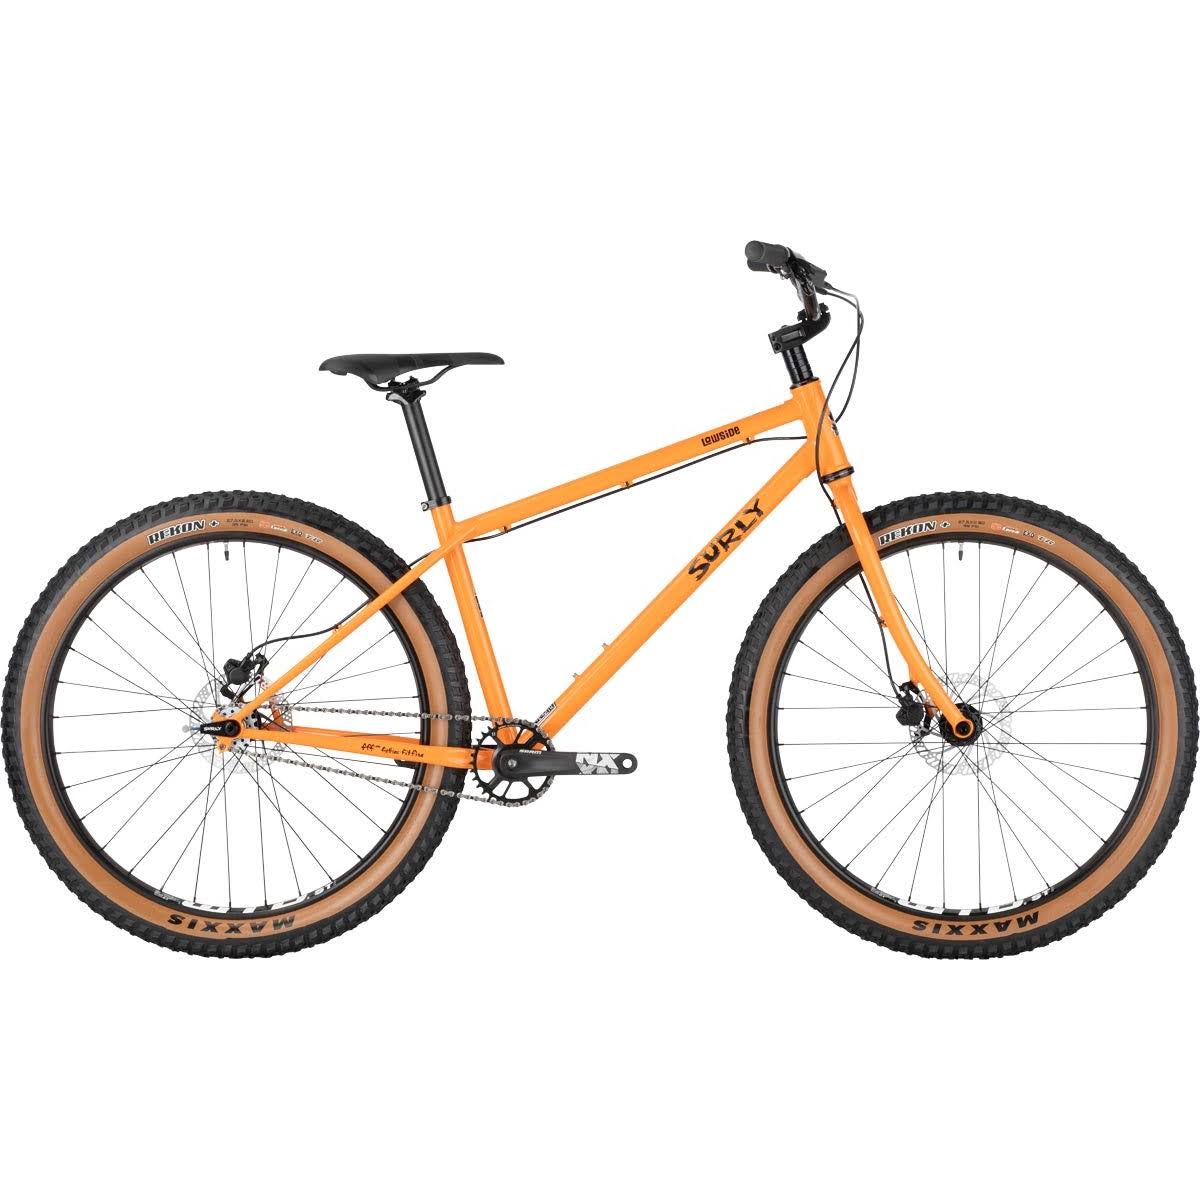 Surly Lowside Single Speed 27.5" Small Mountain Bike - Dream Tangerine